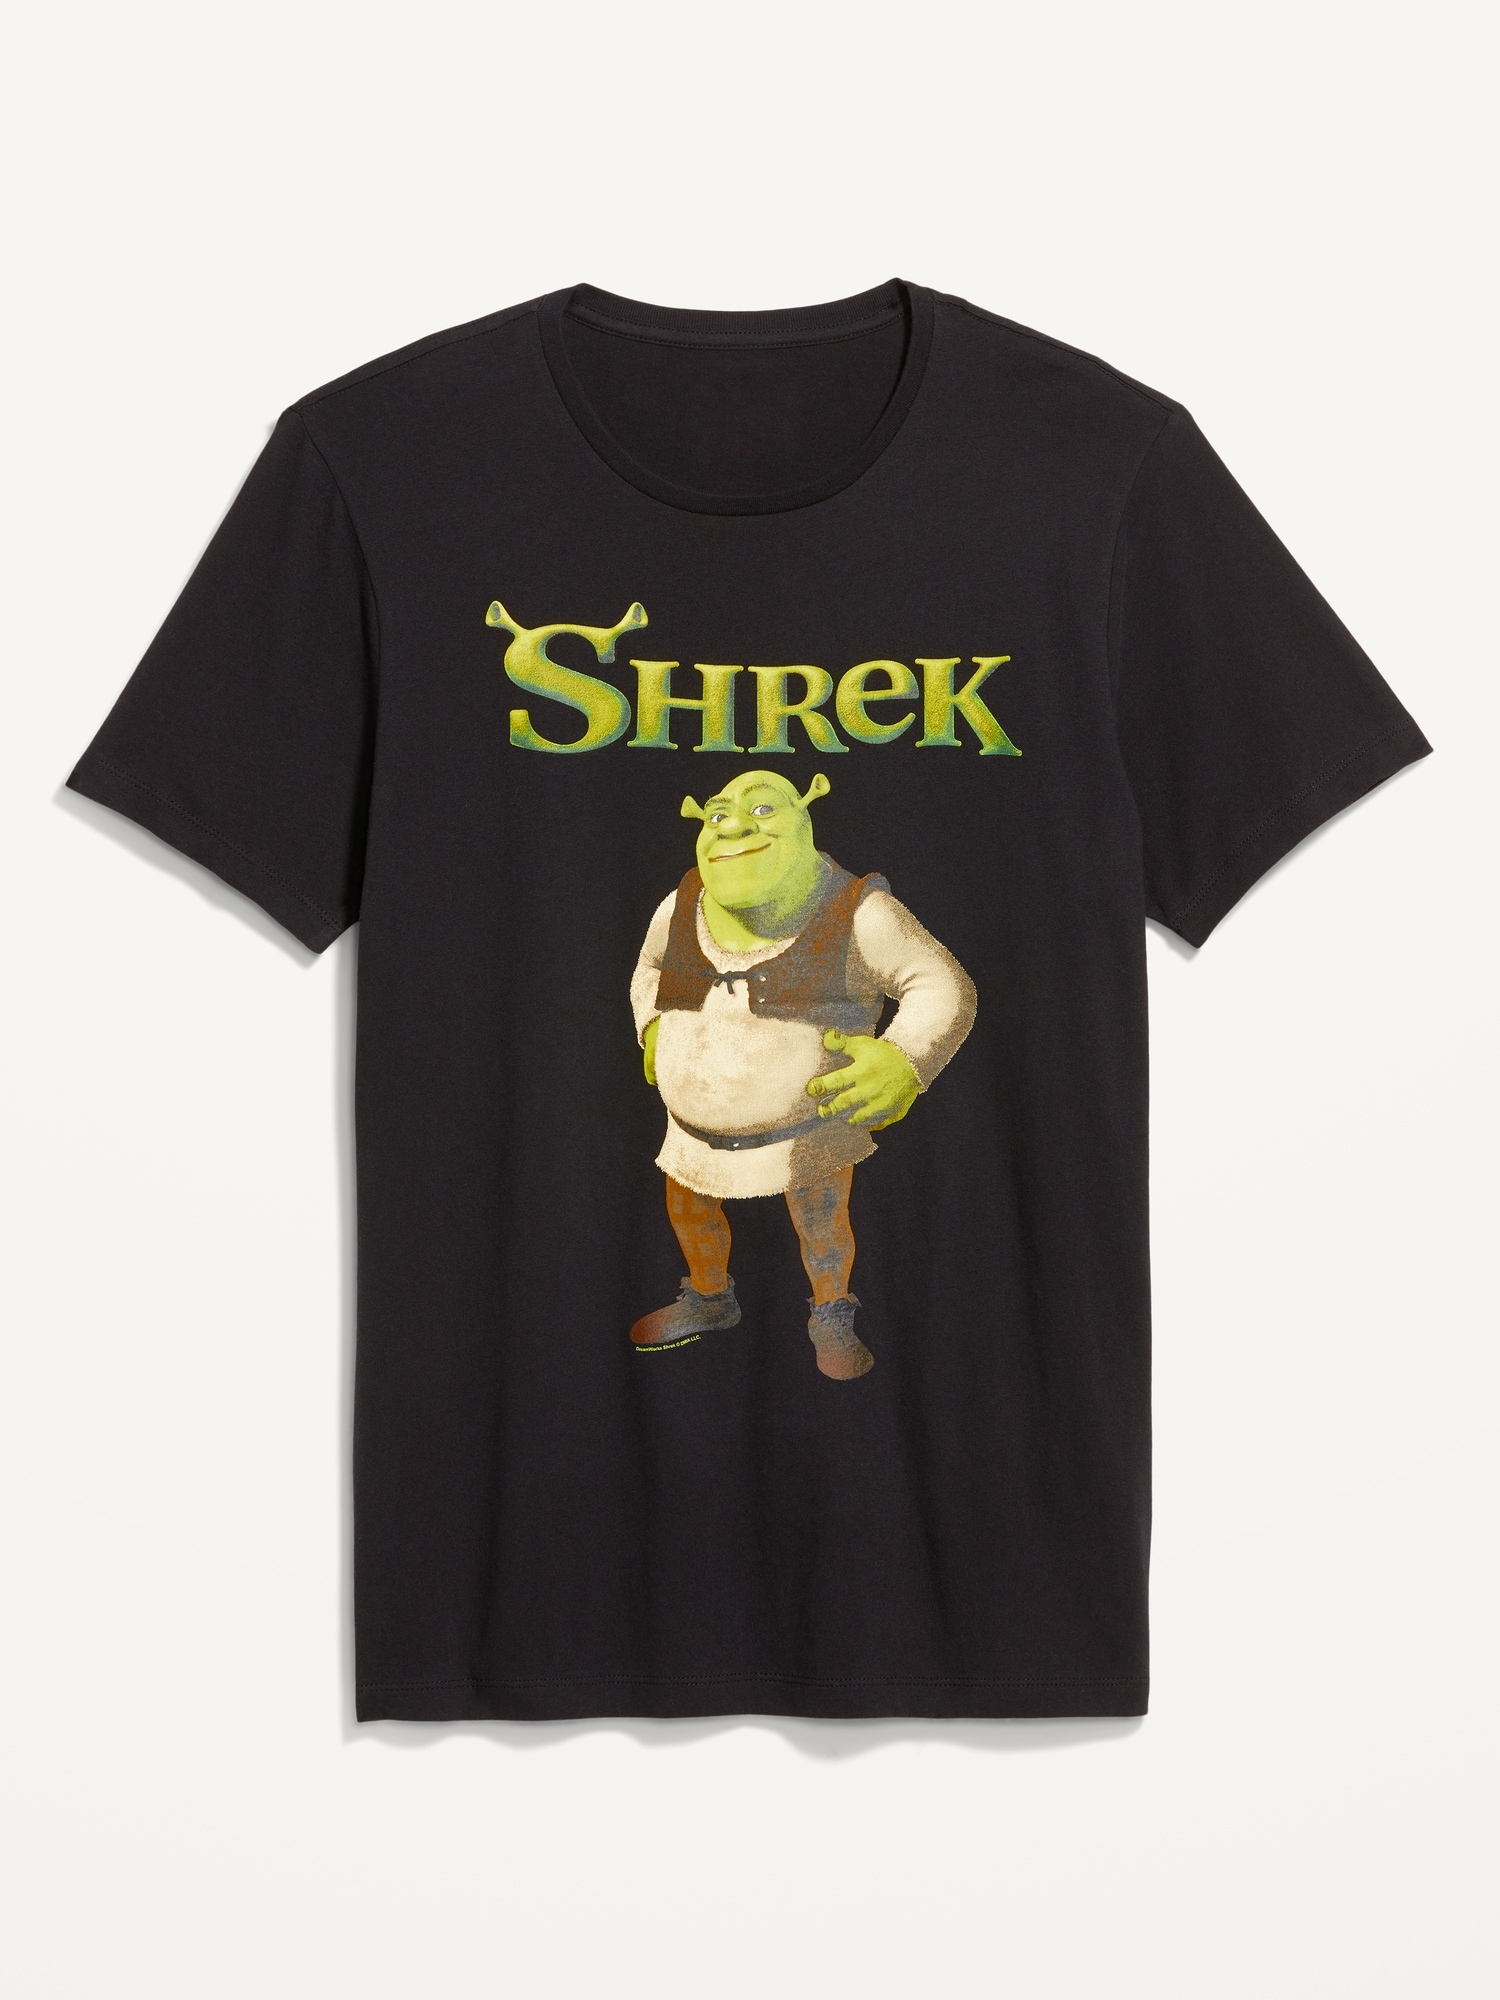 Shrek Gender-Neutral T-Shirt for Adults